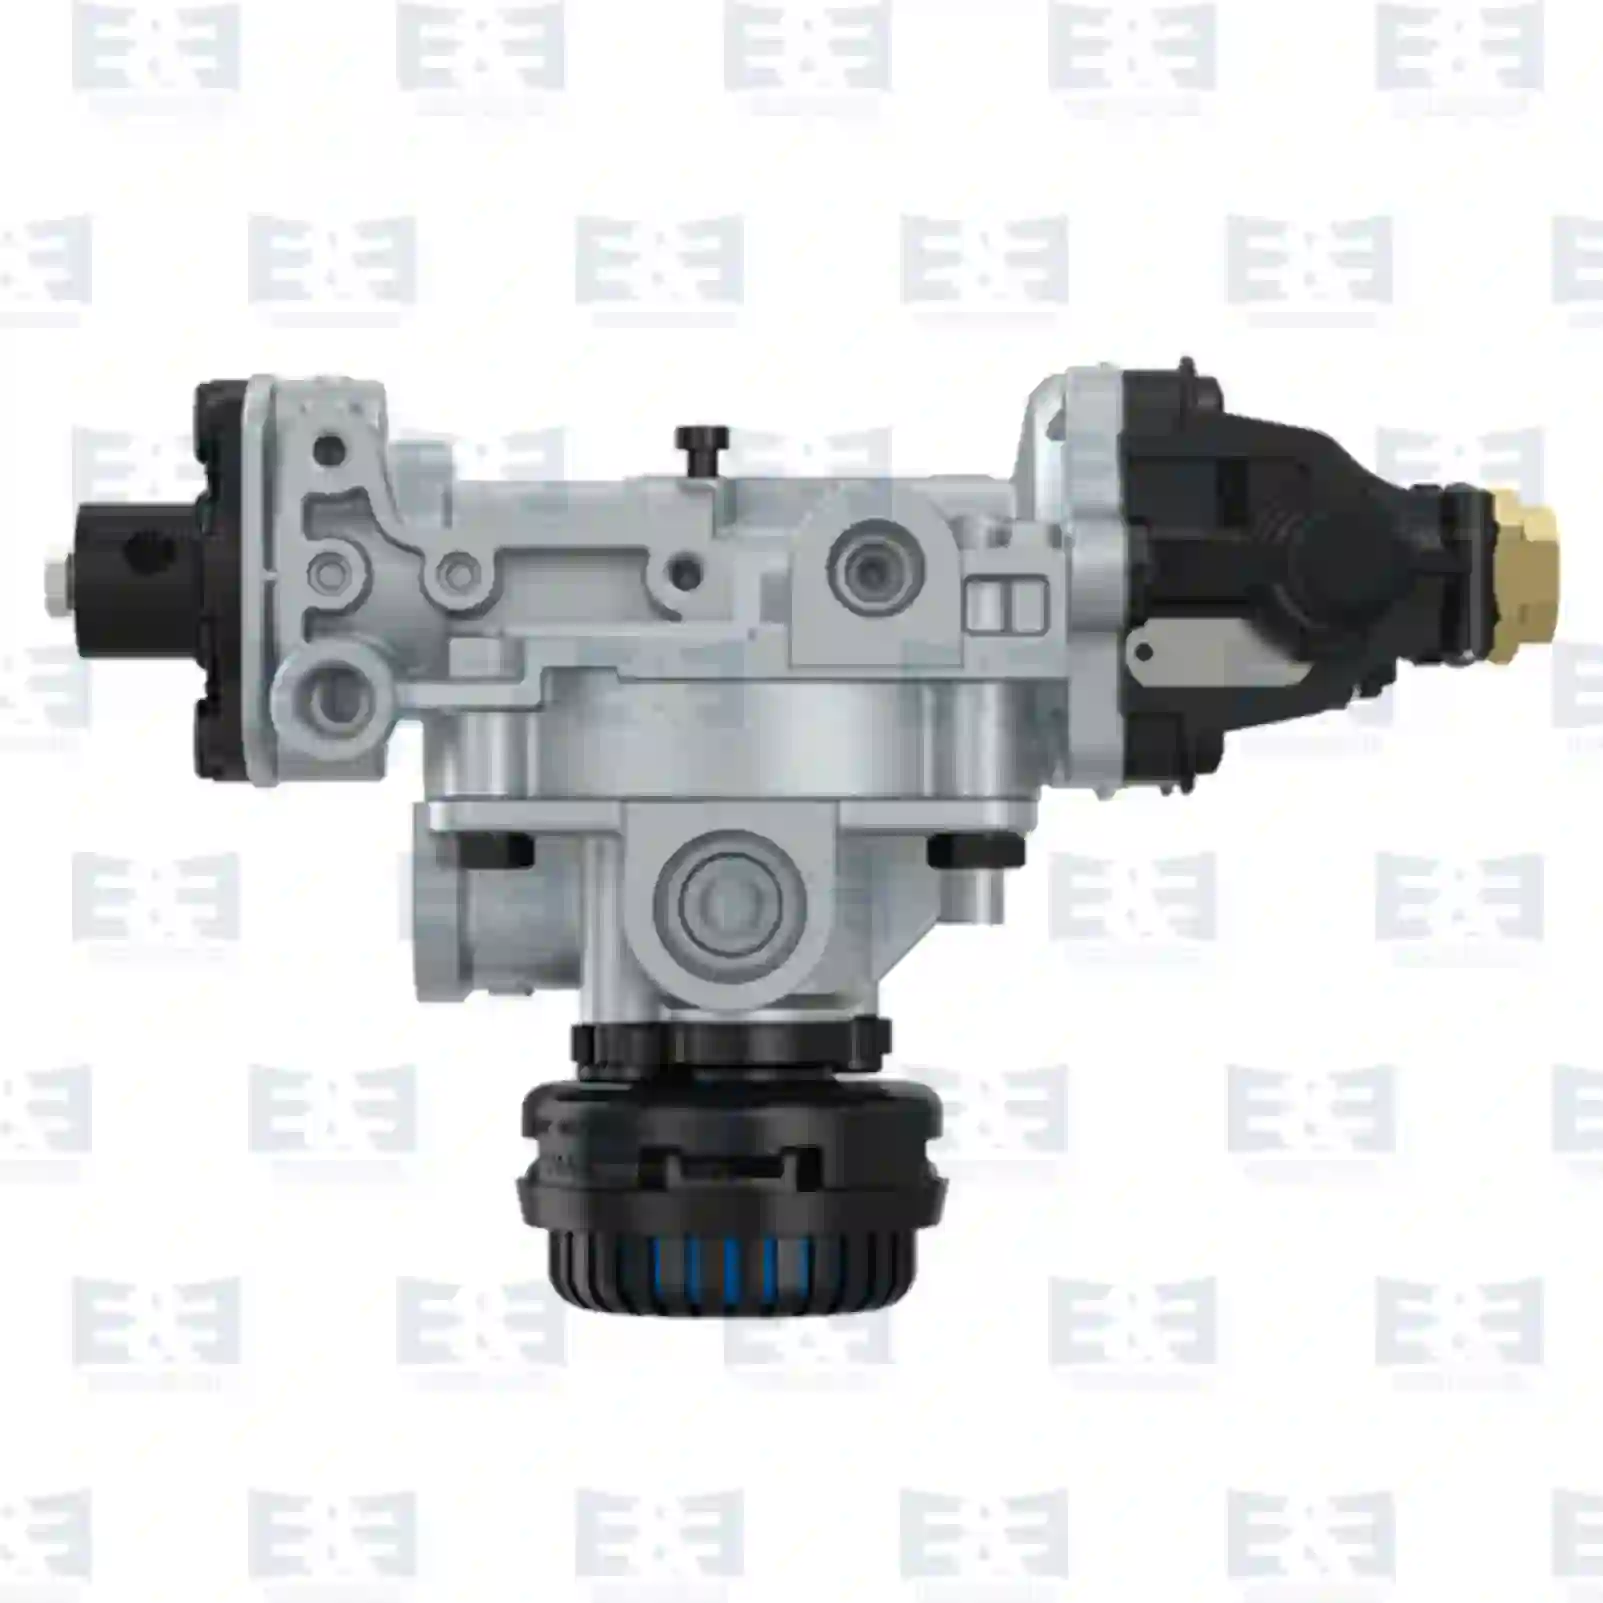 Load Sensitive Valve Brake power regulator, EE No 2E2296002 ,  oem no:1526266, 0044311112, 0044317812 E&E Truck Spare Parts | Truck Spare Parts, Auotomotive Spare Parts